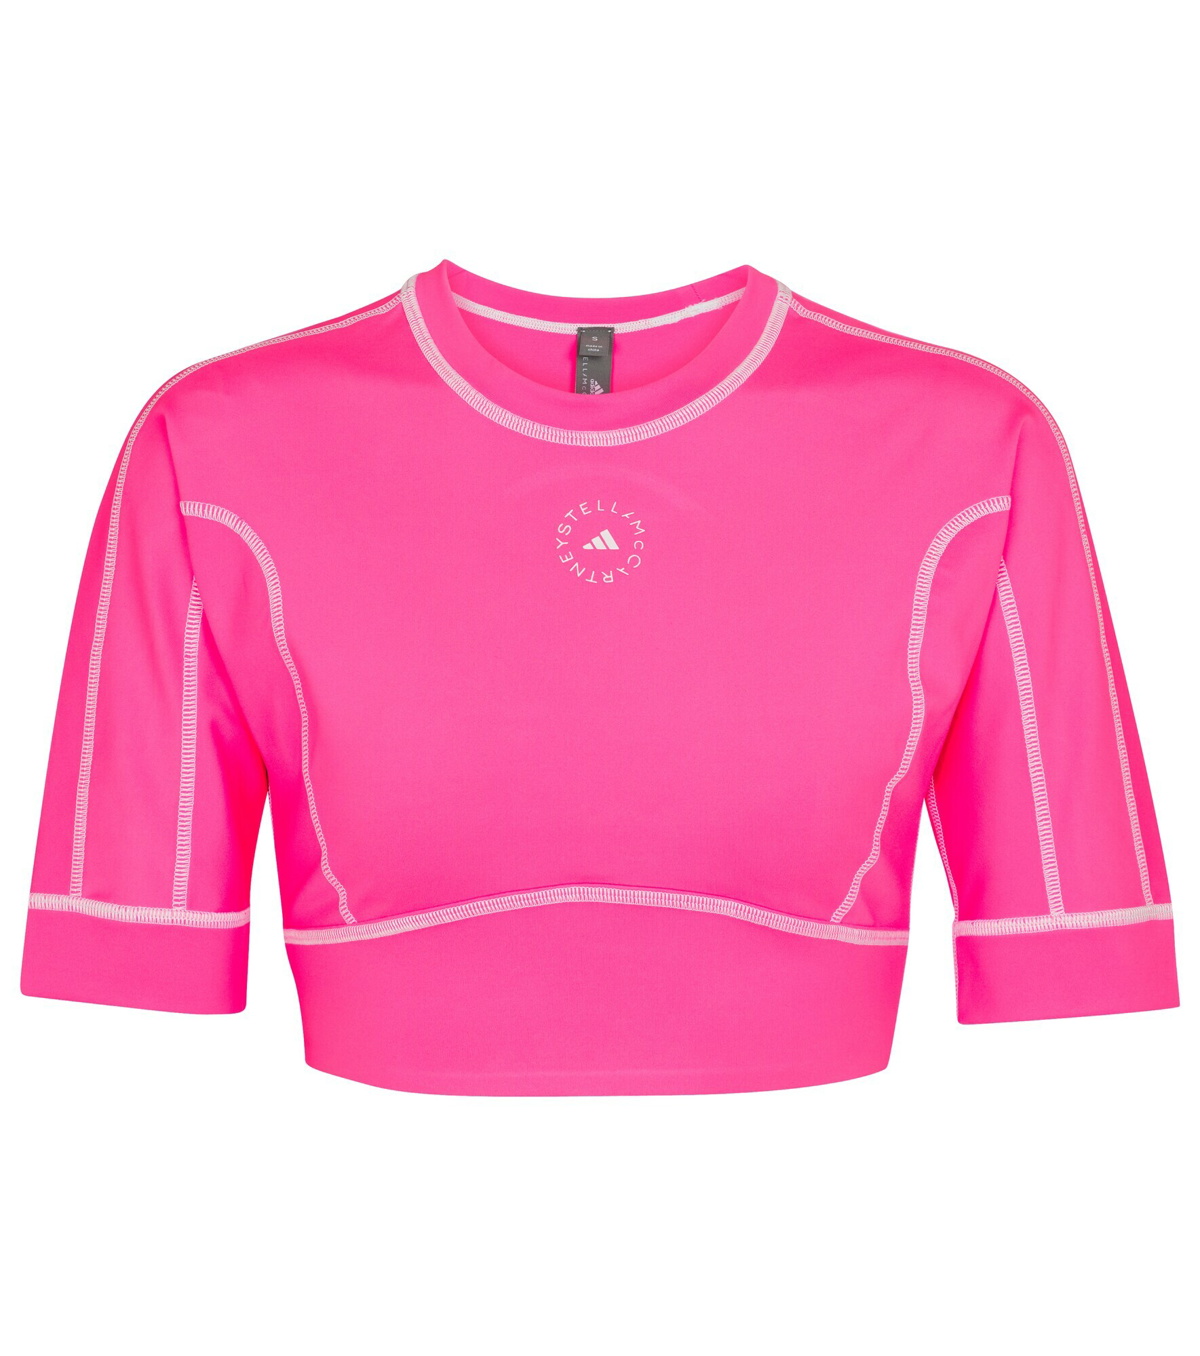 Adidas By Stella McCartney Debossed Rubber Yoga Mat - Pink